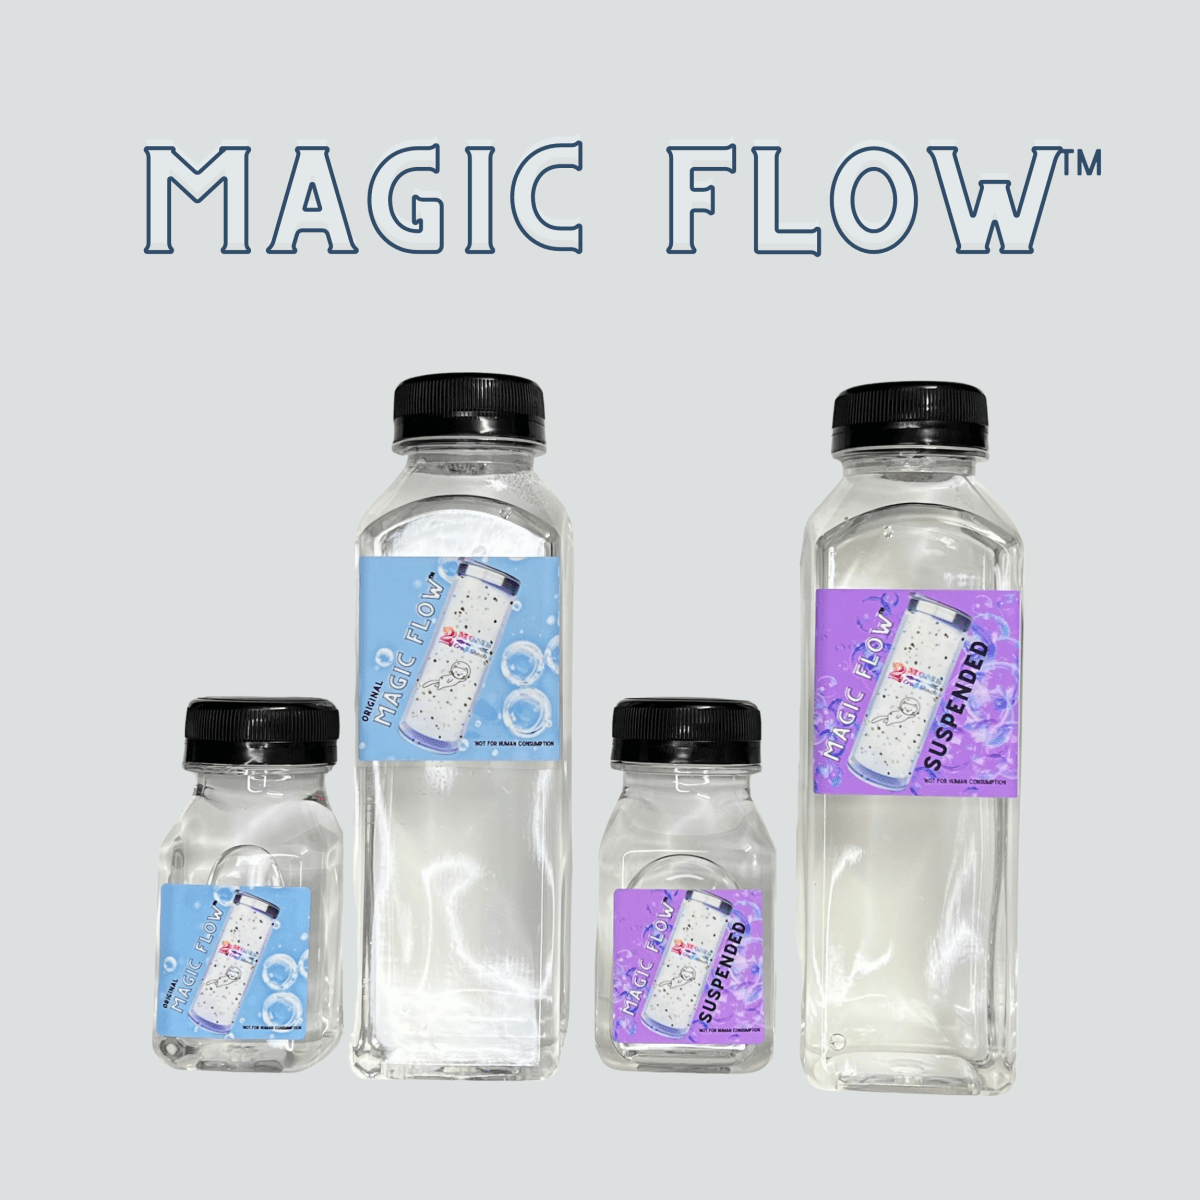 Magic Flow™ SUSPENDED - CRAFT SUPPLIES